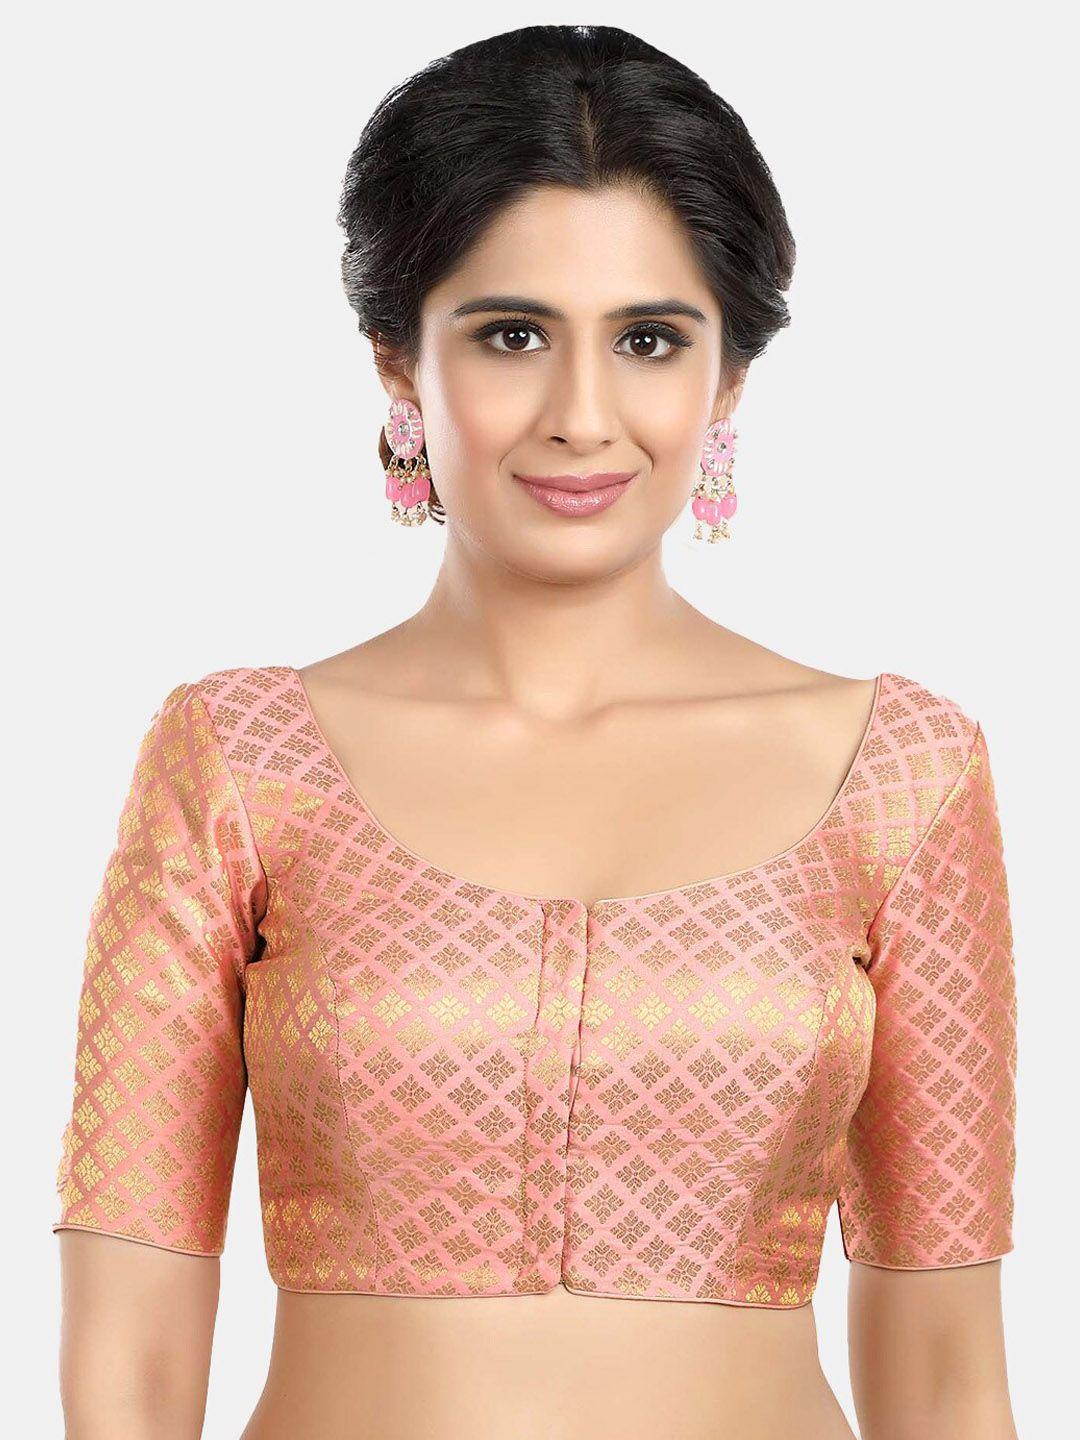 neckbook woven design round neck princess cut padded brocade readymade saree blouse